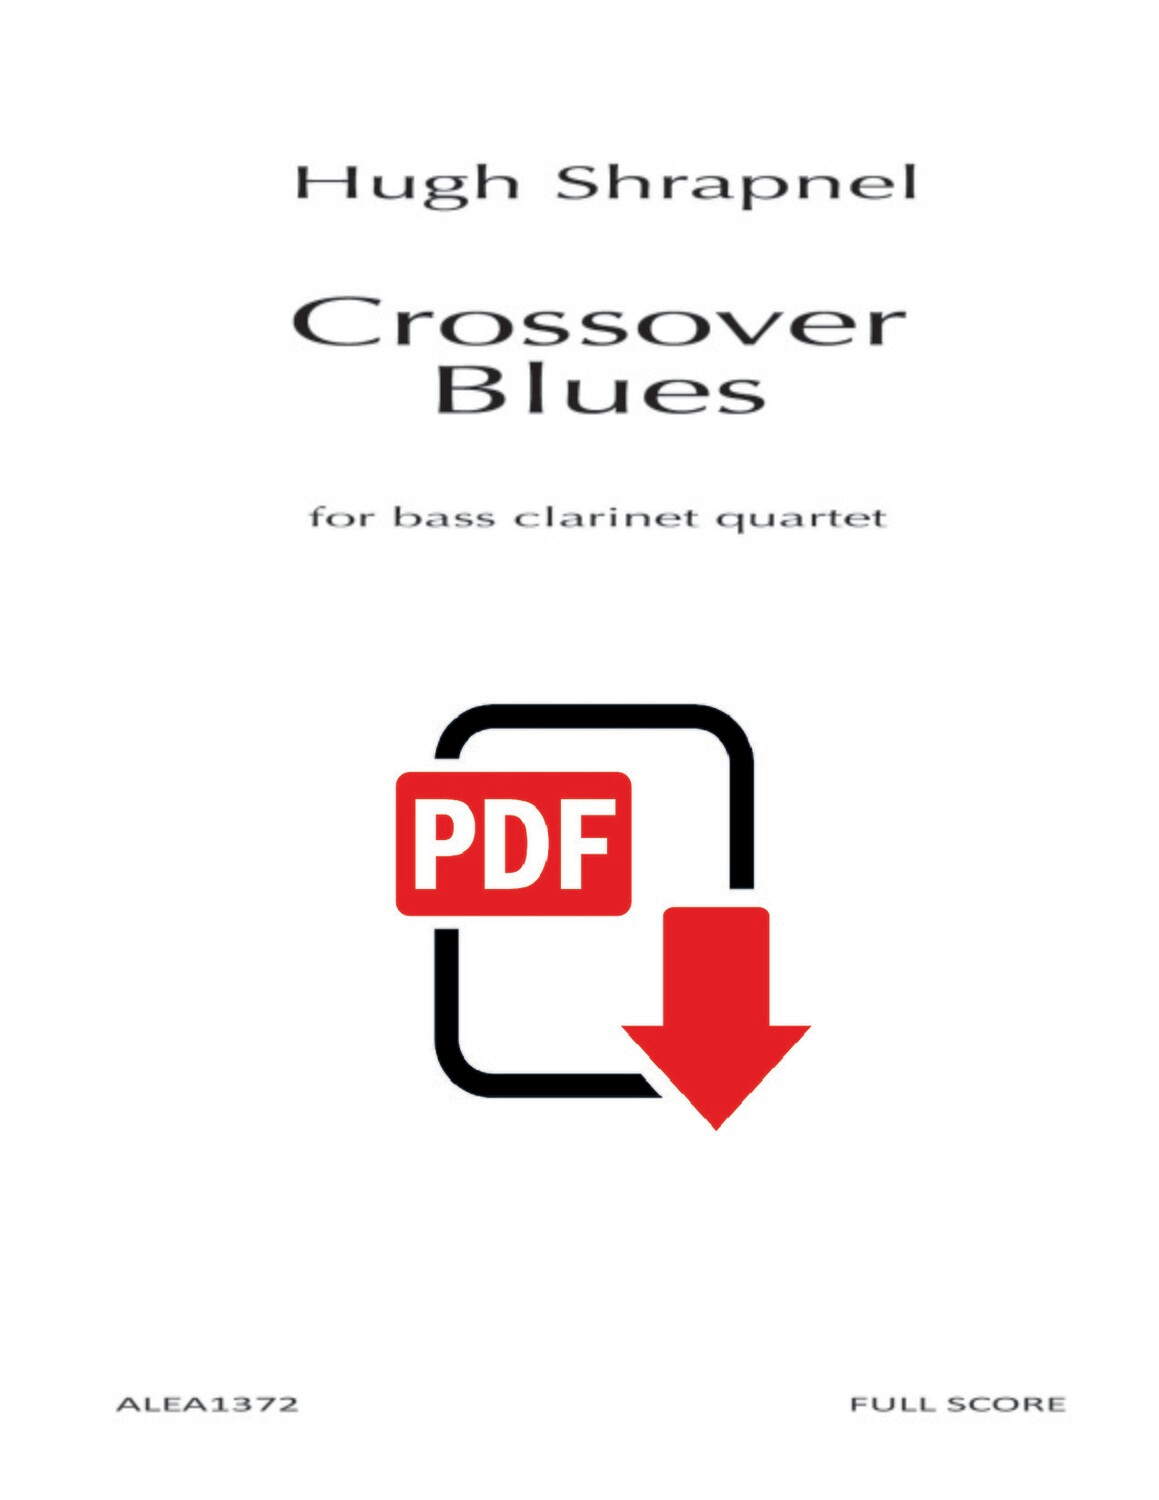 Shrapnel: Crossover Blues (PDF)